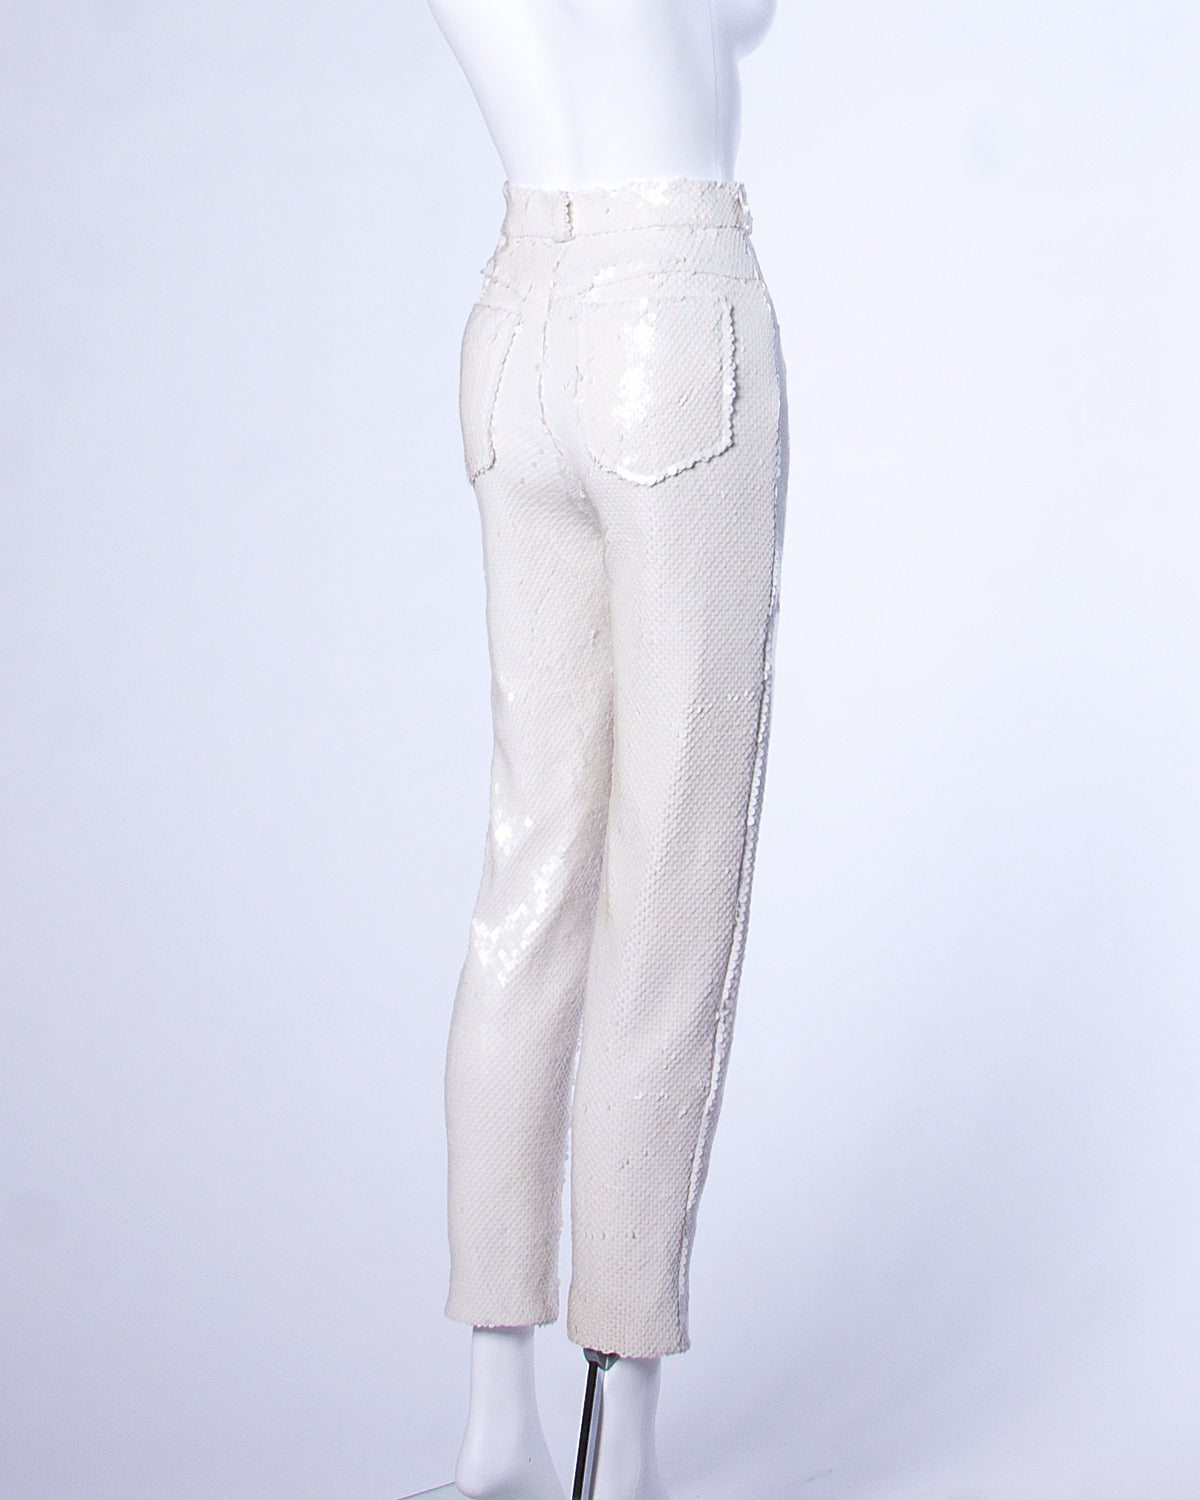 Gray Jeanette for St. Martin Vintage 1980s 80s White Sequin High Waist Pants